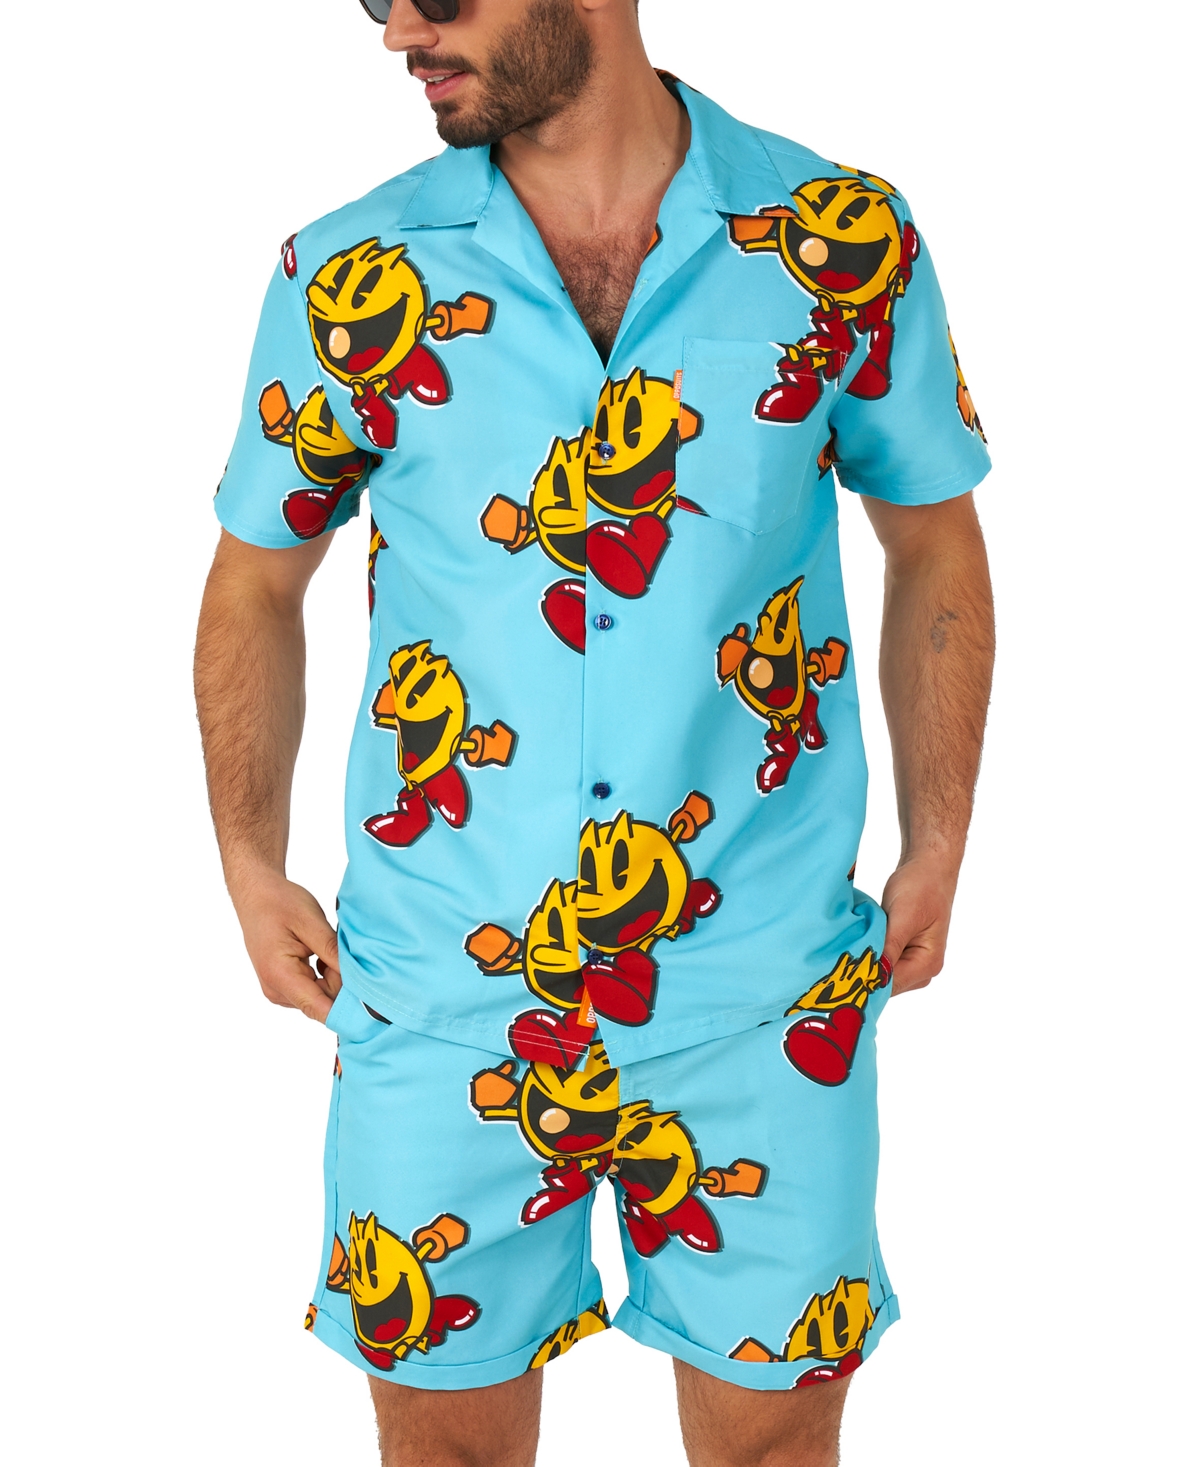 Men's Short-Sleeve Pac-Man Graphic Shirt & Shorts Set - Blue